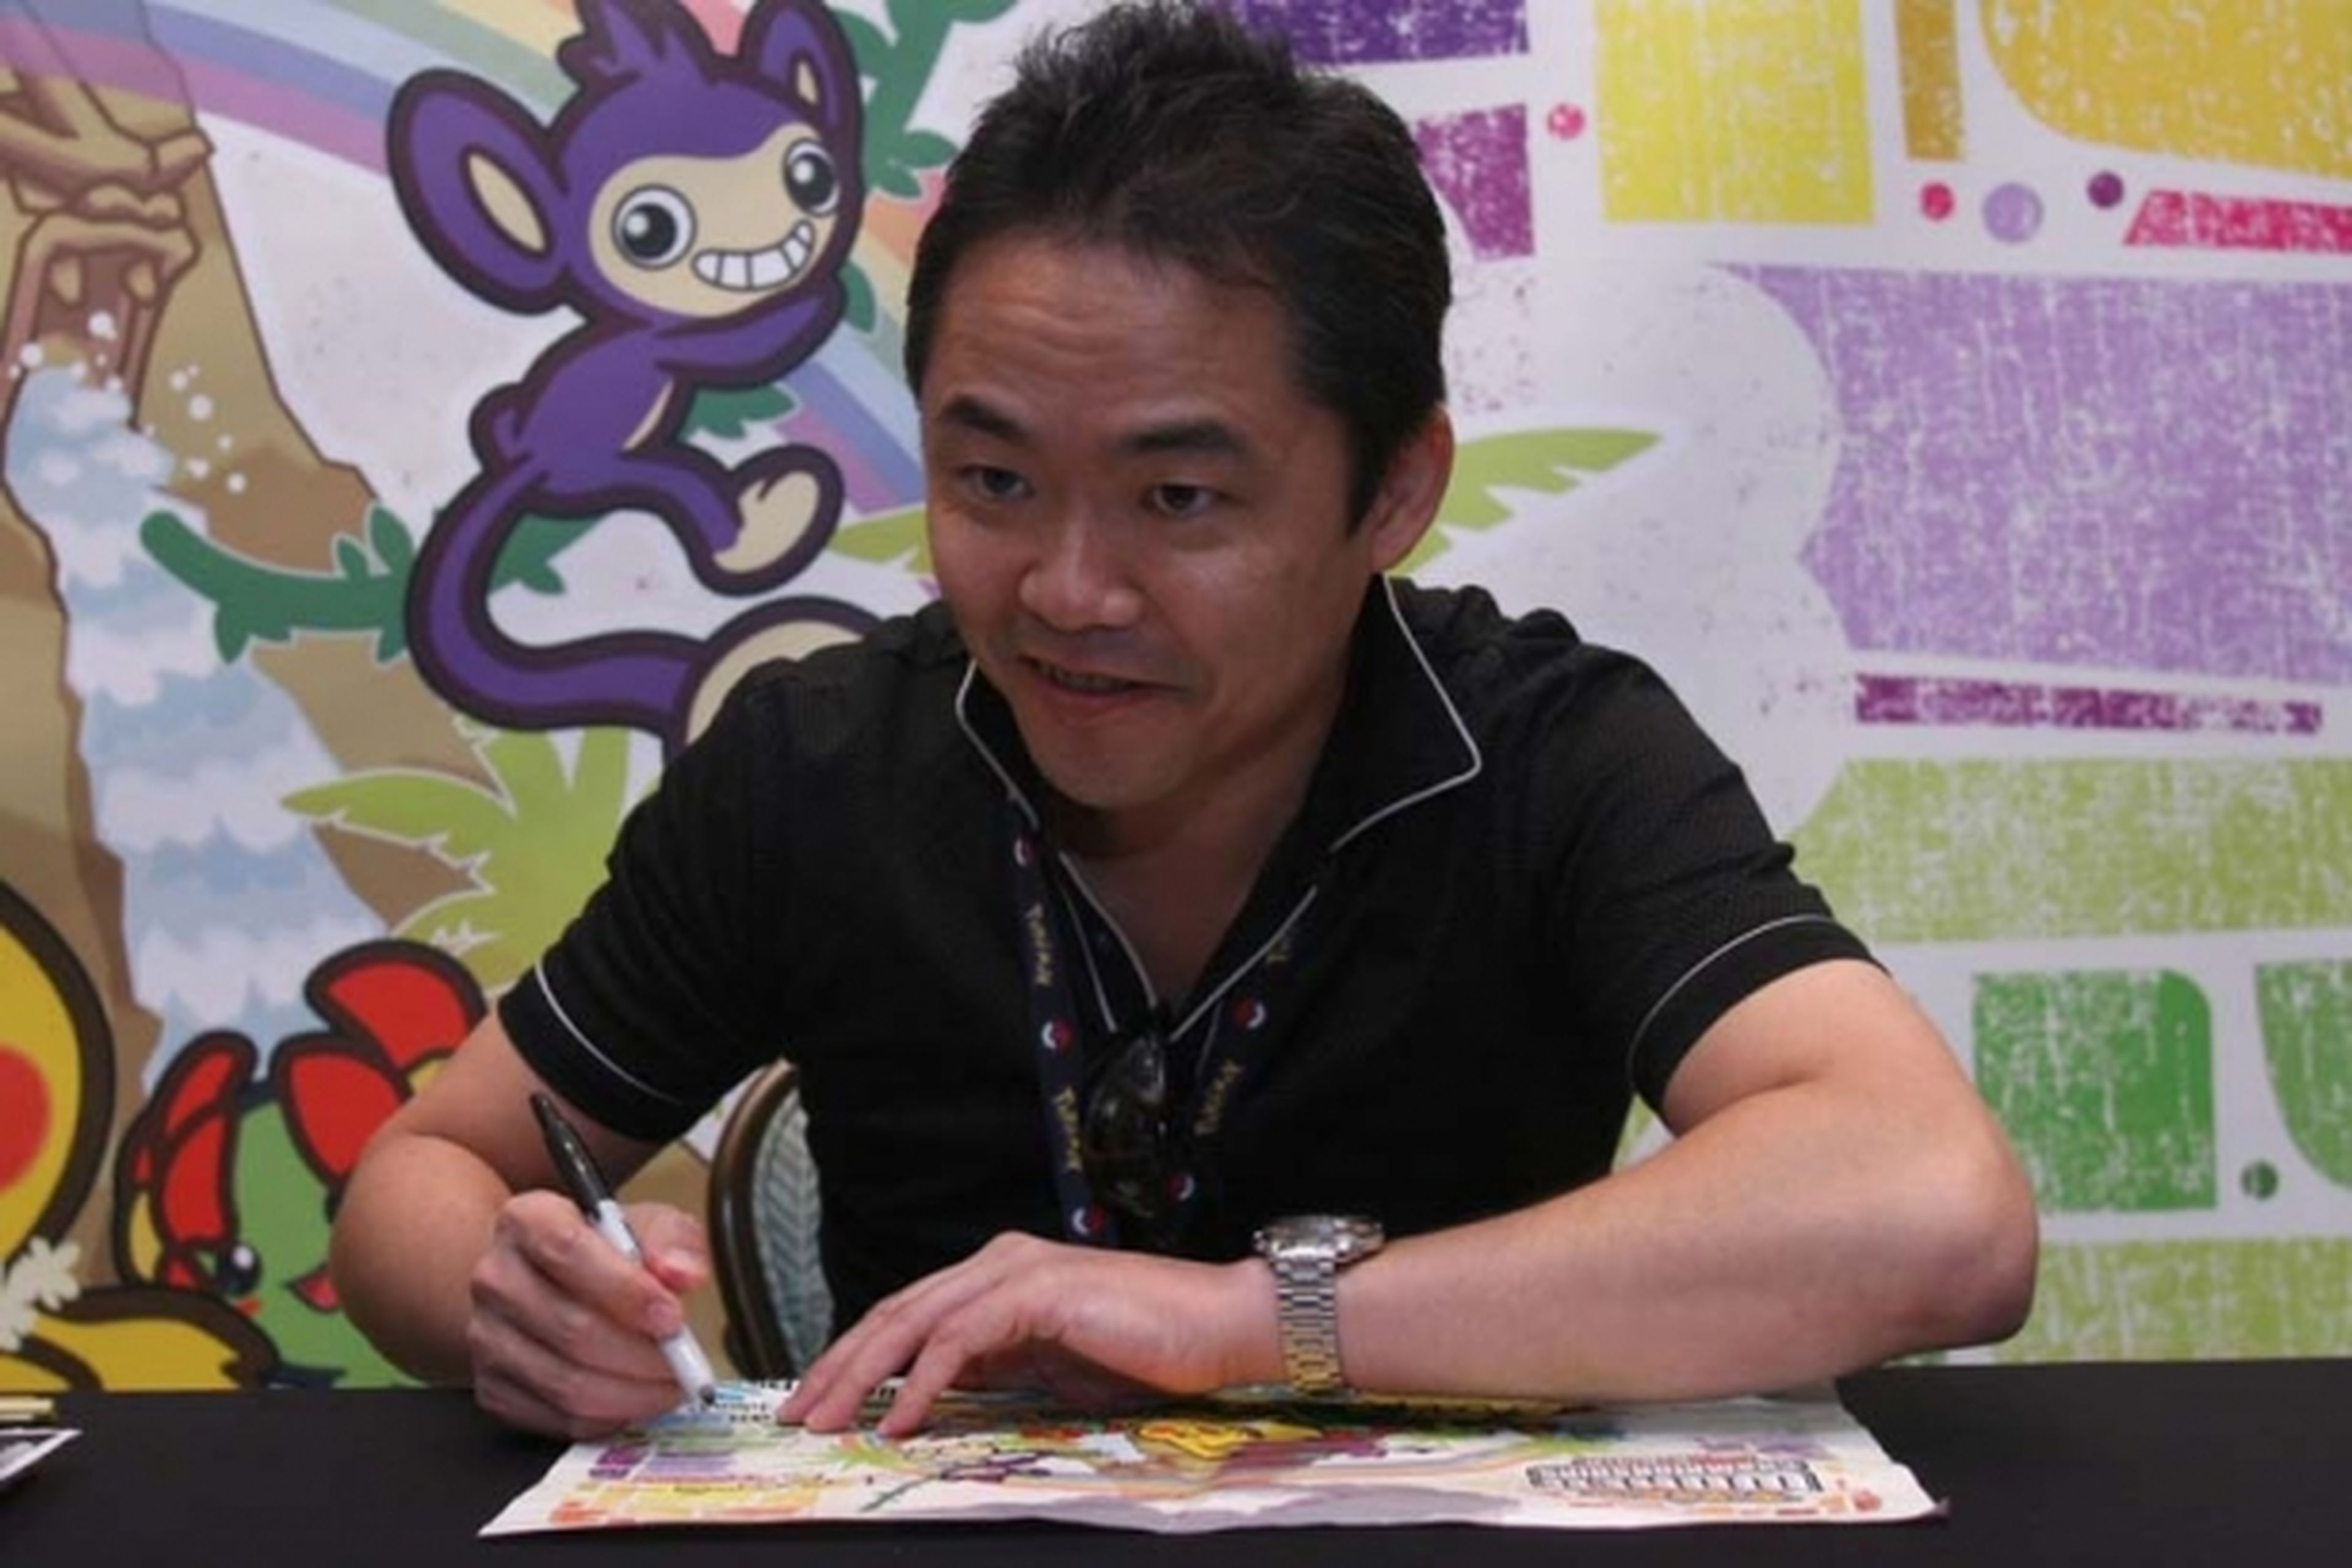 Junichi Masuda (Pokémon) en el salón del Manga de Barcelona